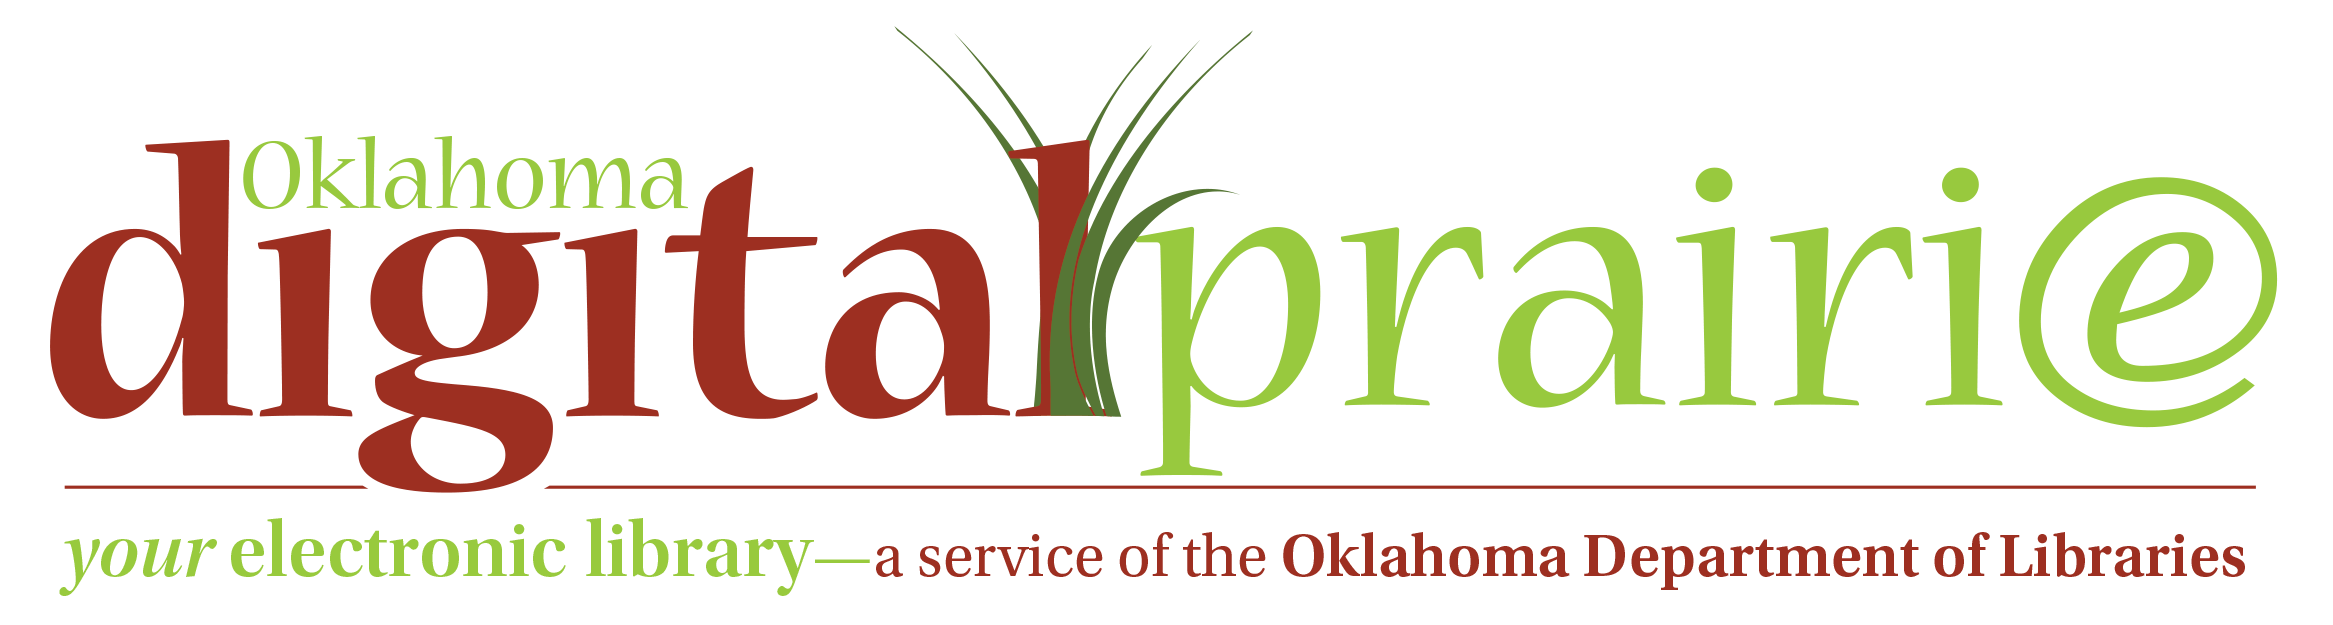 Prairie Logo - Oklahoma Digital Prairie: Documents, Images and Information